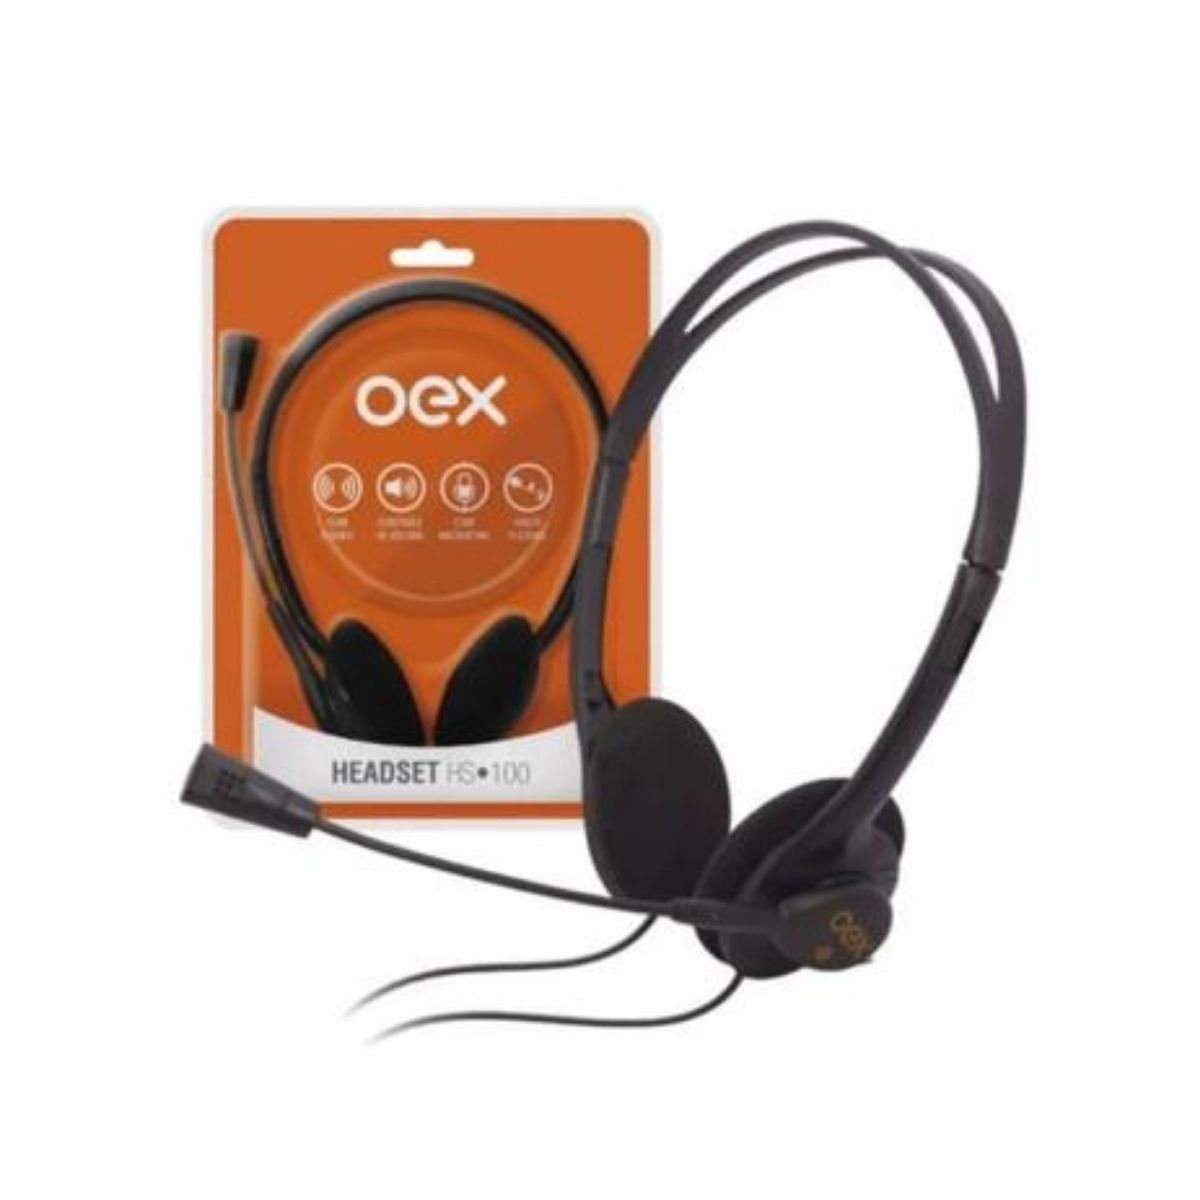 Fone de Ouvido Headset com Microfone HS100 OEX